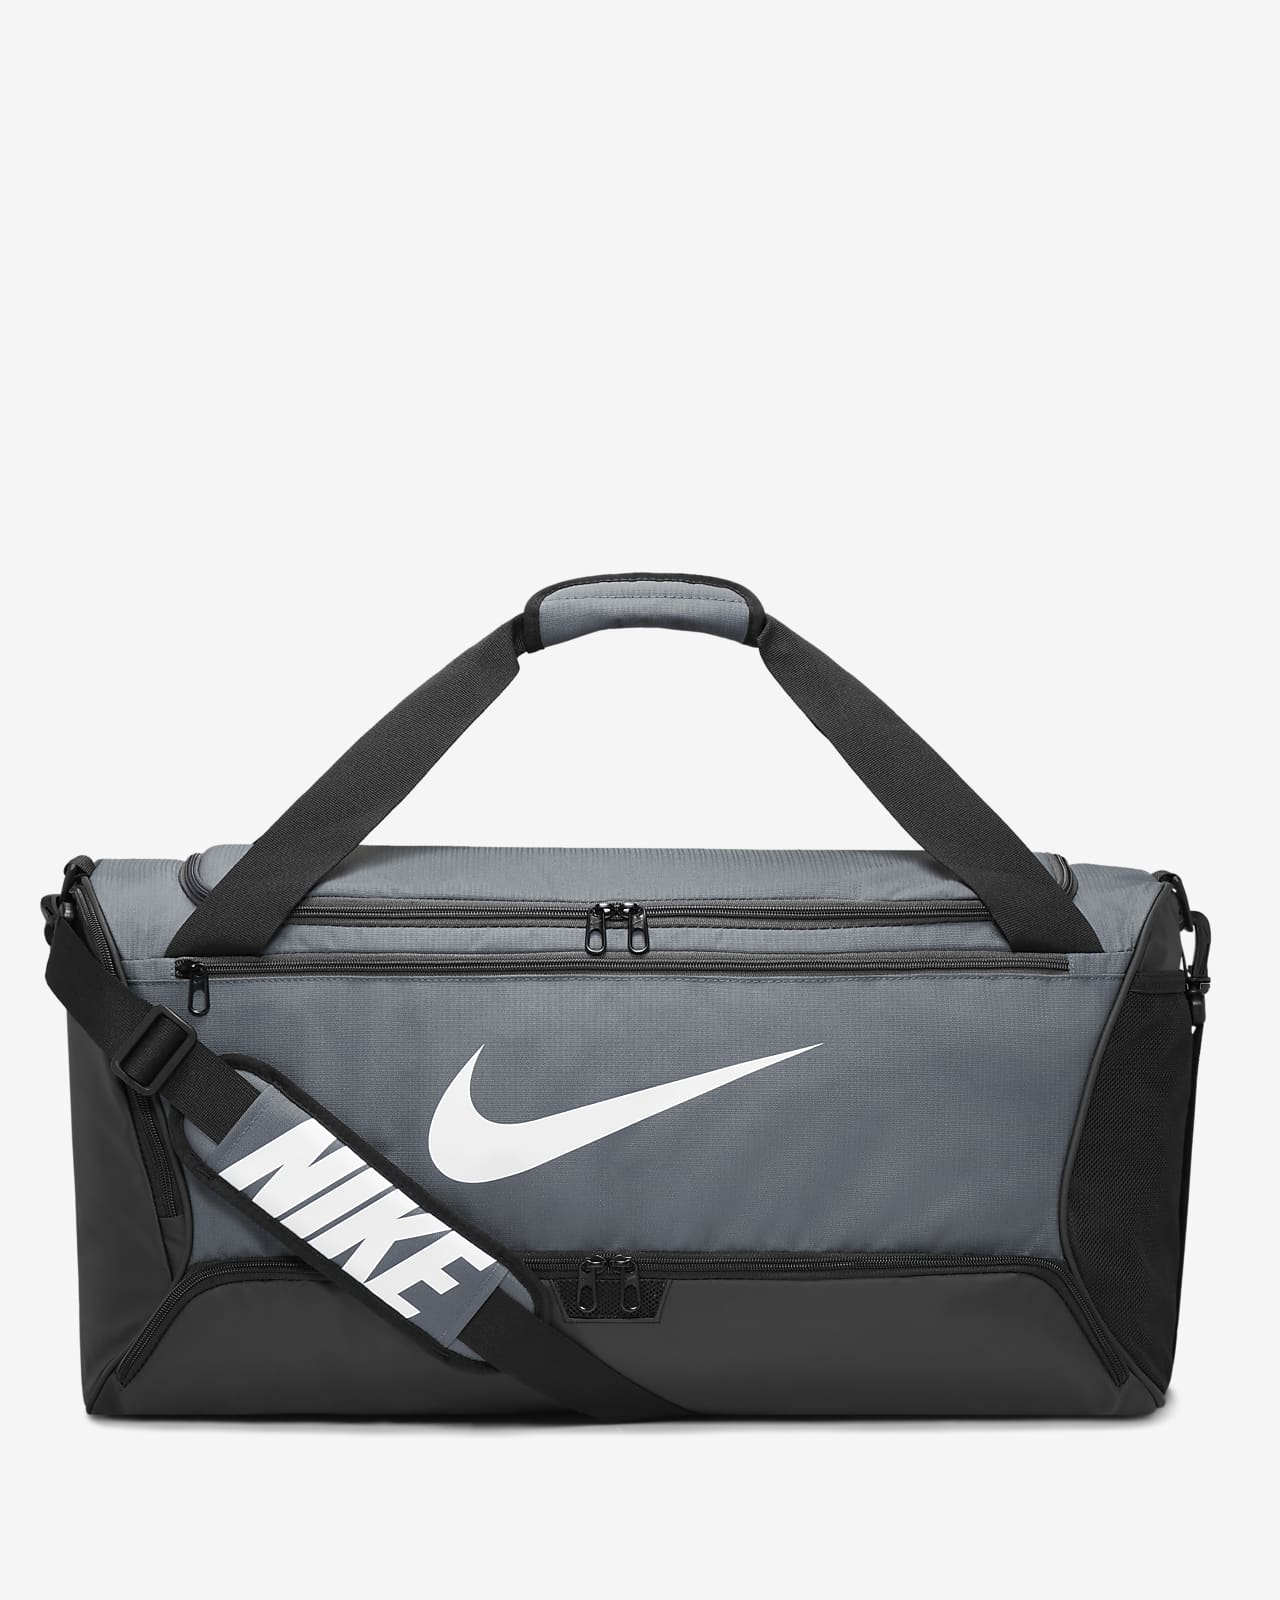 Nike Sports Bag Training Gym Bag Men Woman Fitness Bags Durable  Multifunction Handbag | Shopee Malaysia